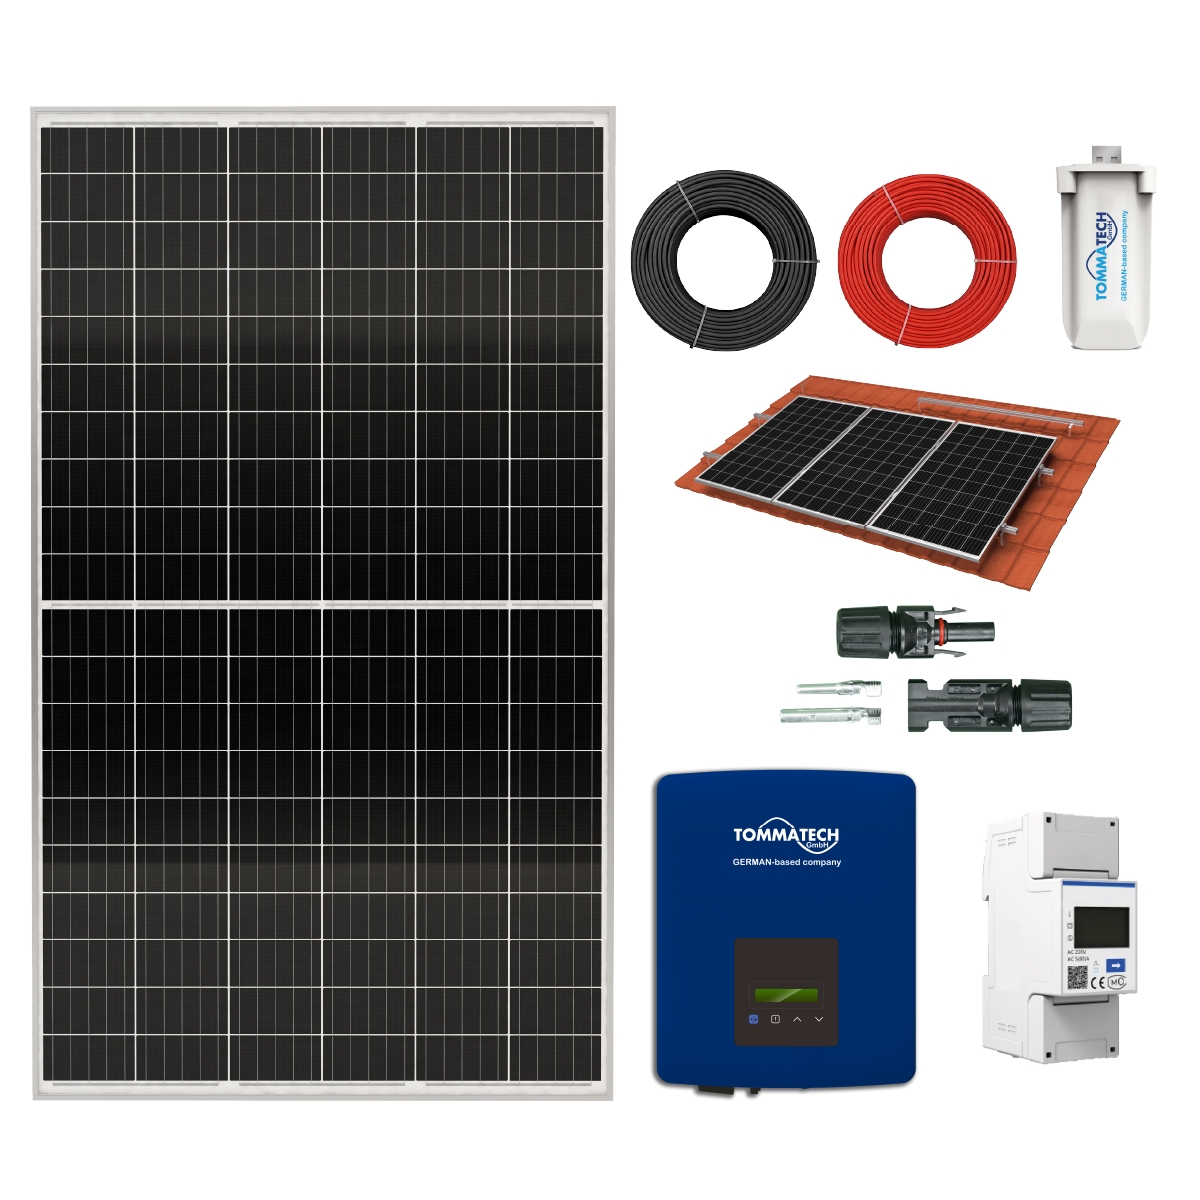 2.5kW / 3.42kWp Solar On-Grid Plug & Play Solution